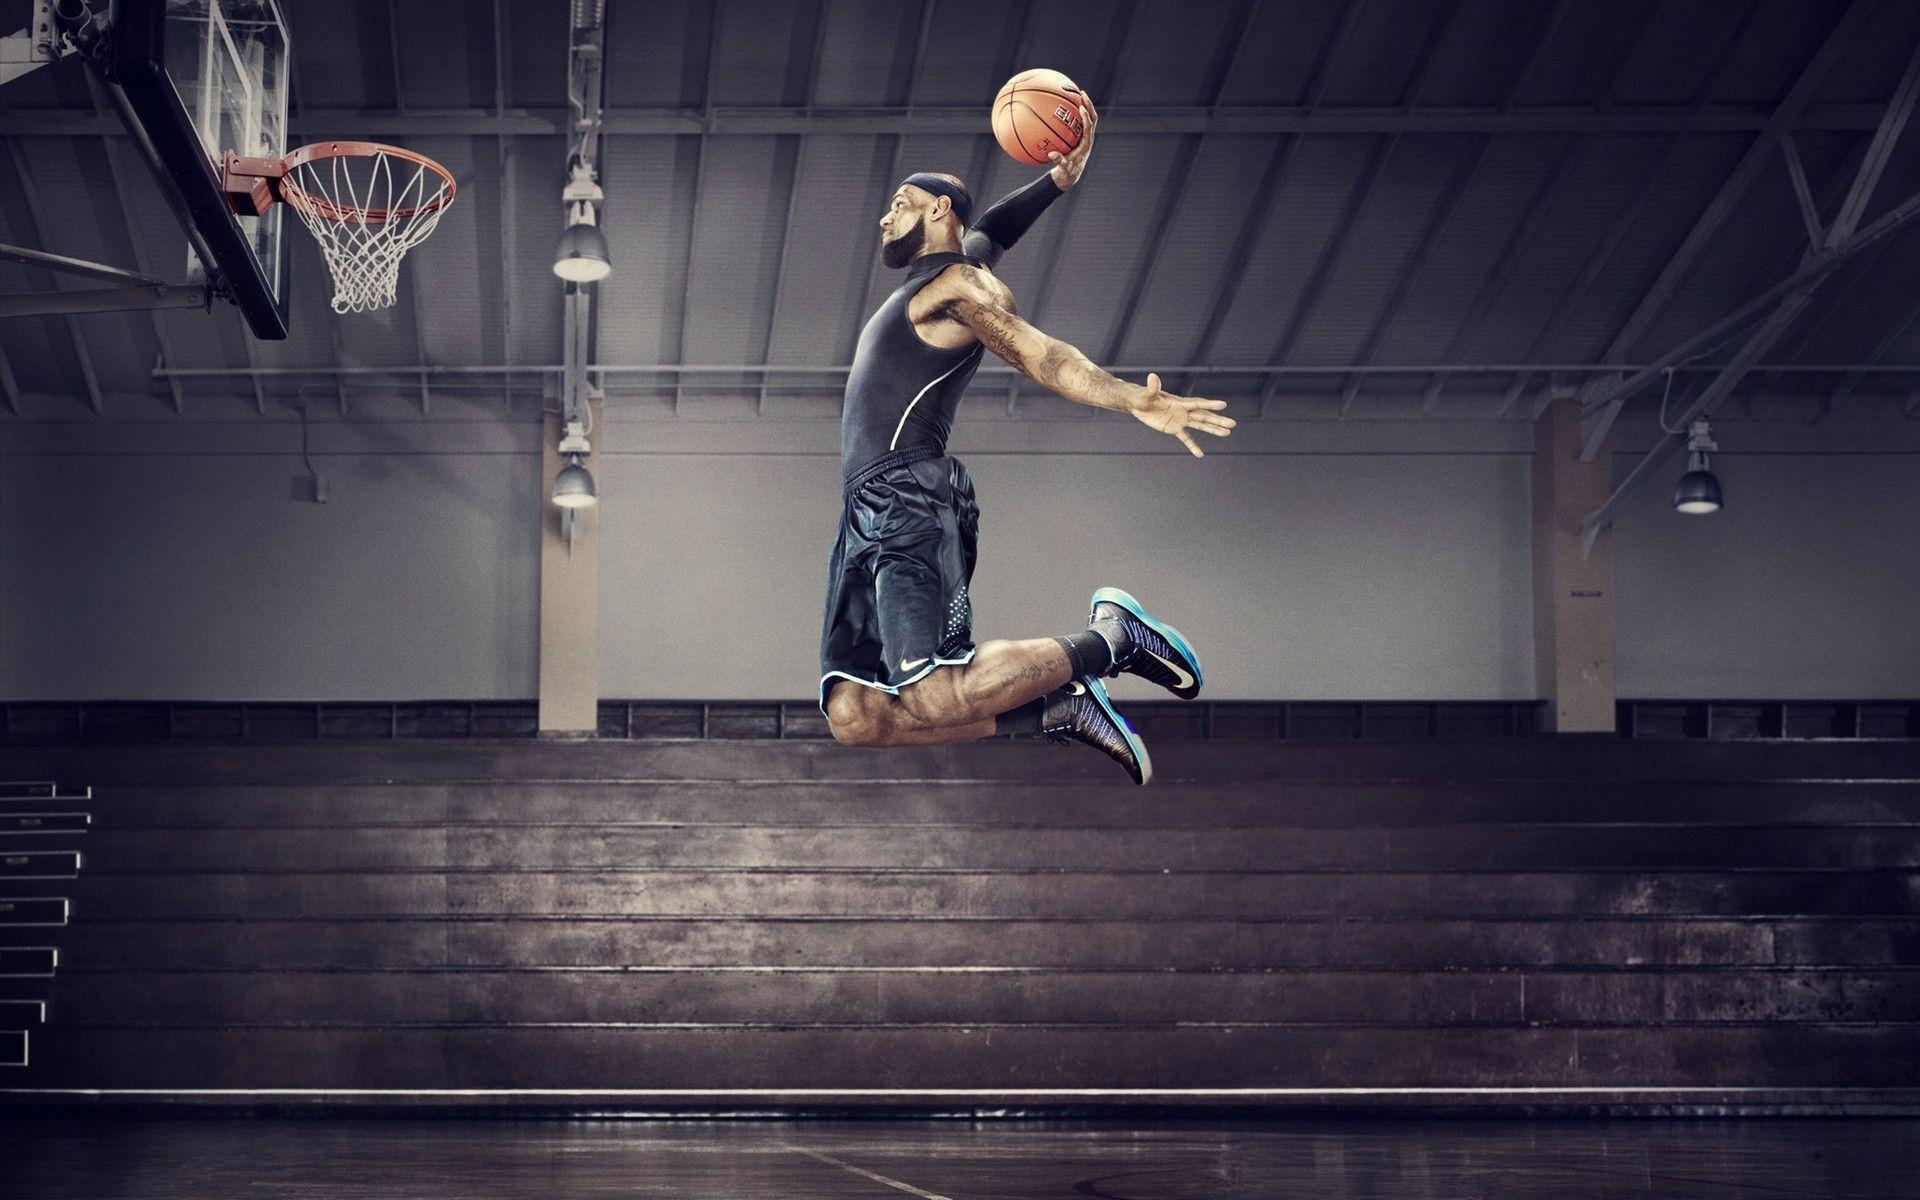 Nike Basketball 34 103598 Image HD Wallpaper. Wallfoy.com